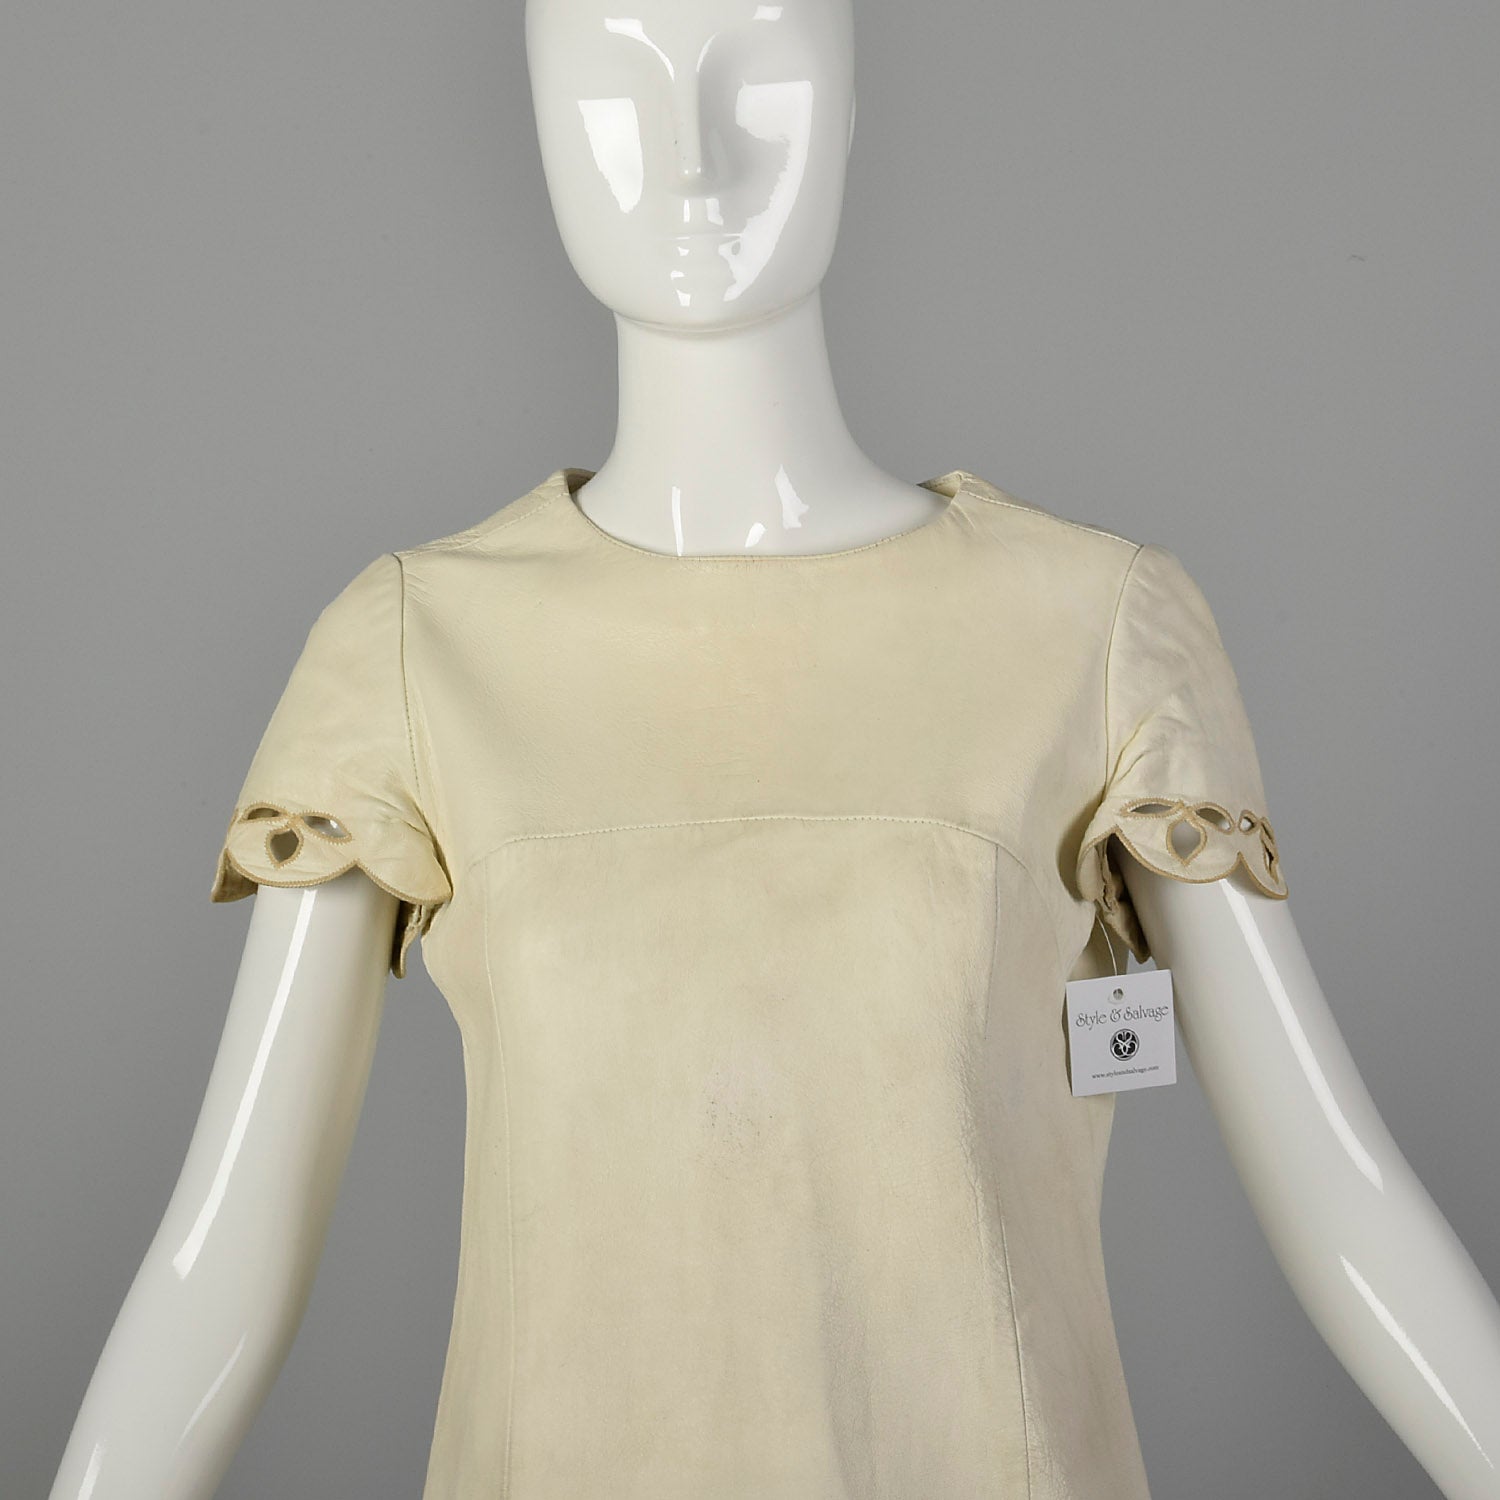 1960s Mod White Micro Mini Leather Dress Cut-Out Trim